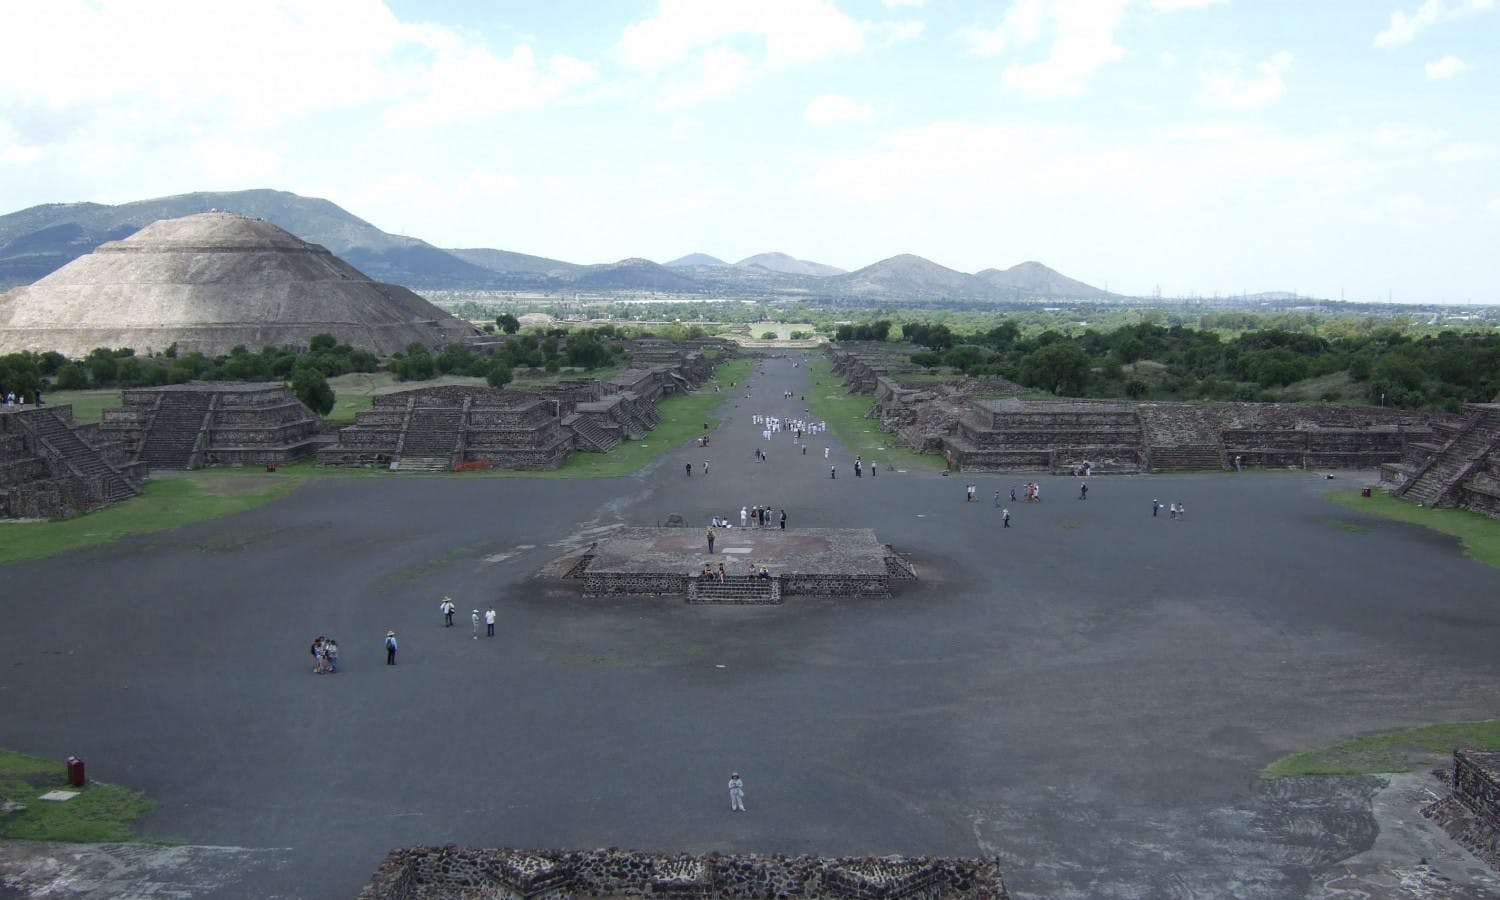 Visita guiada temprana a Teotihuacán